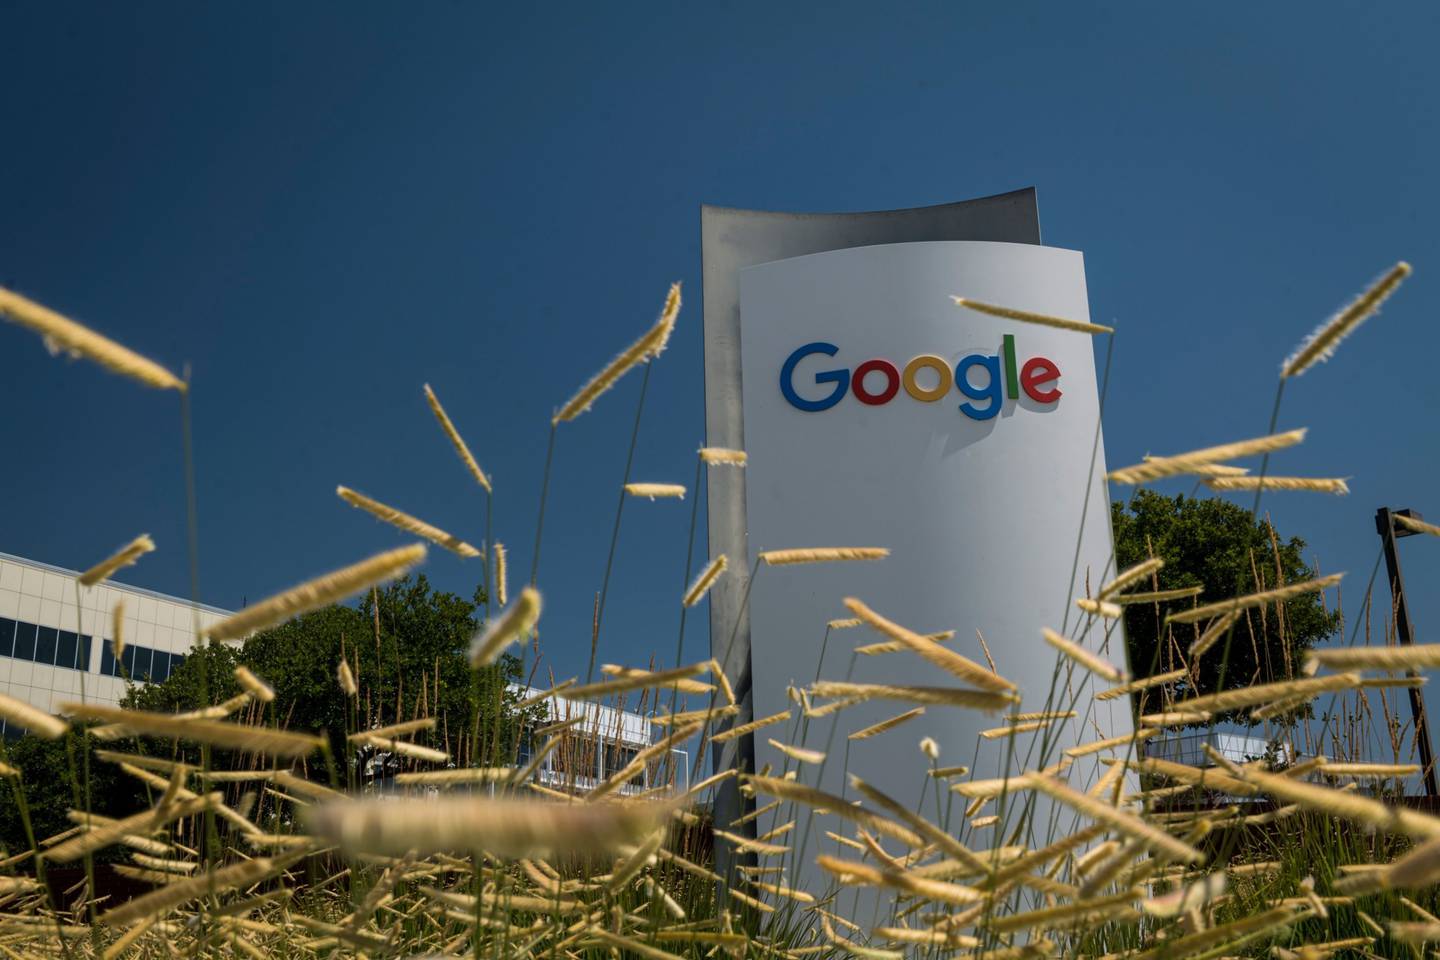 El logo de Google